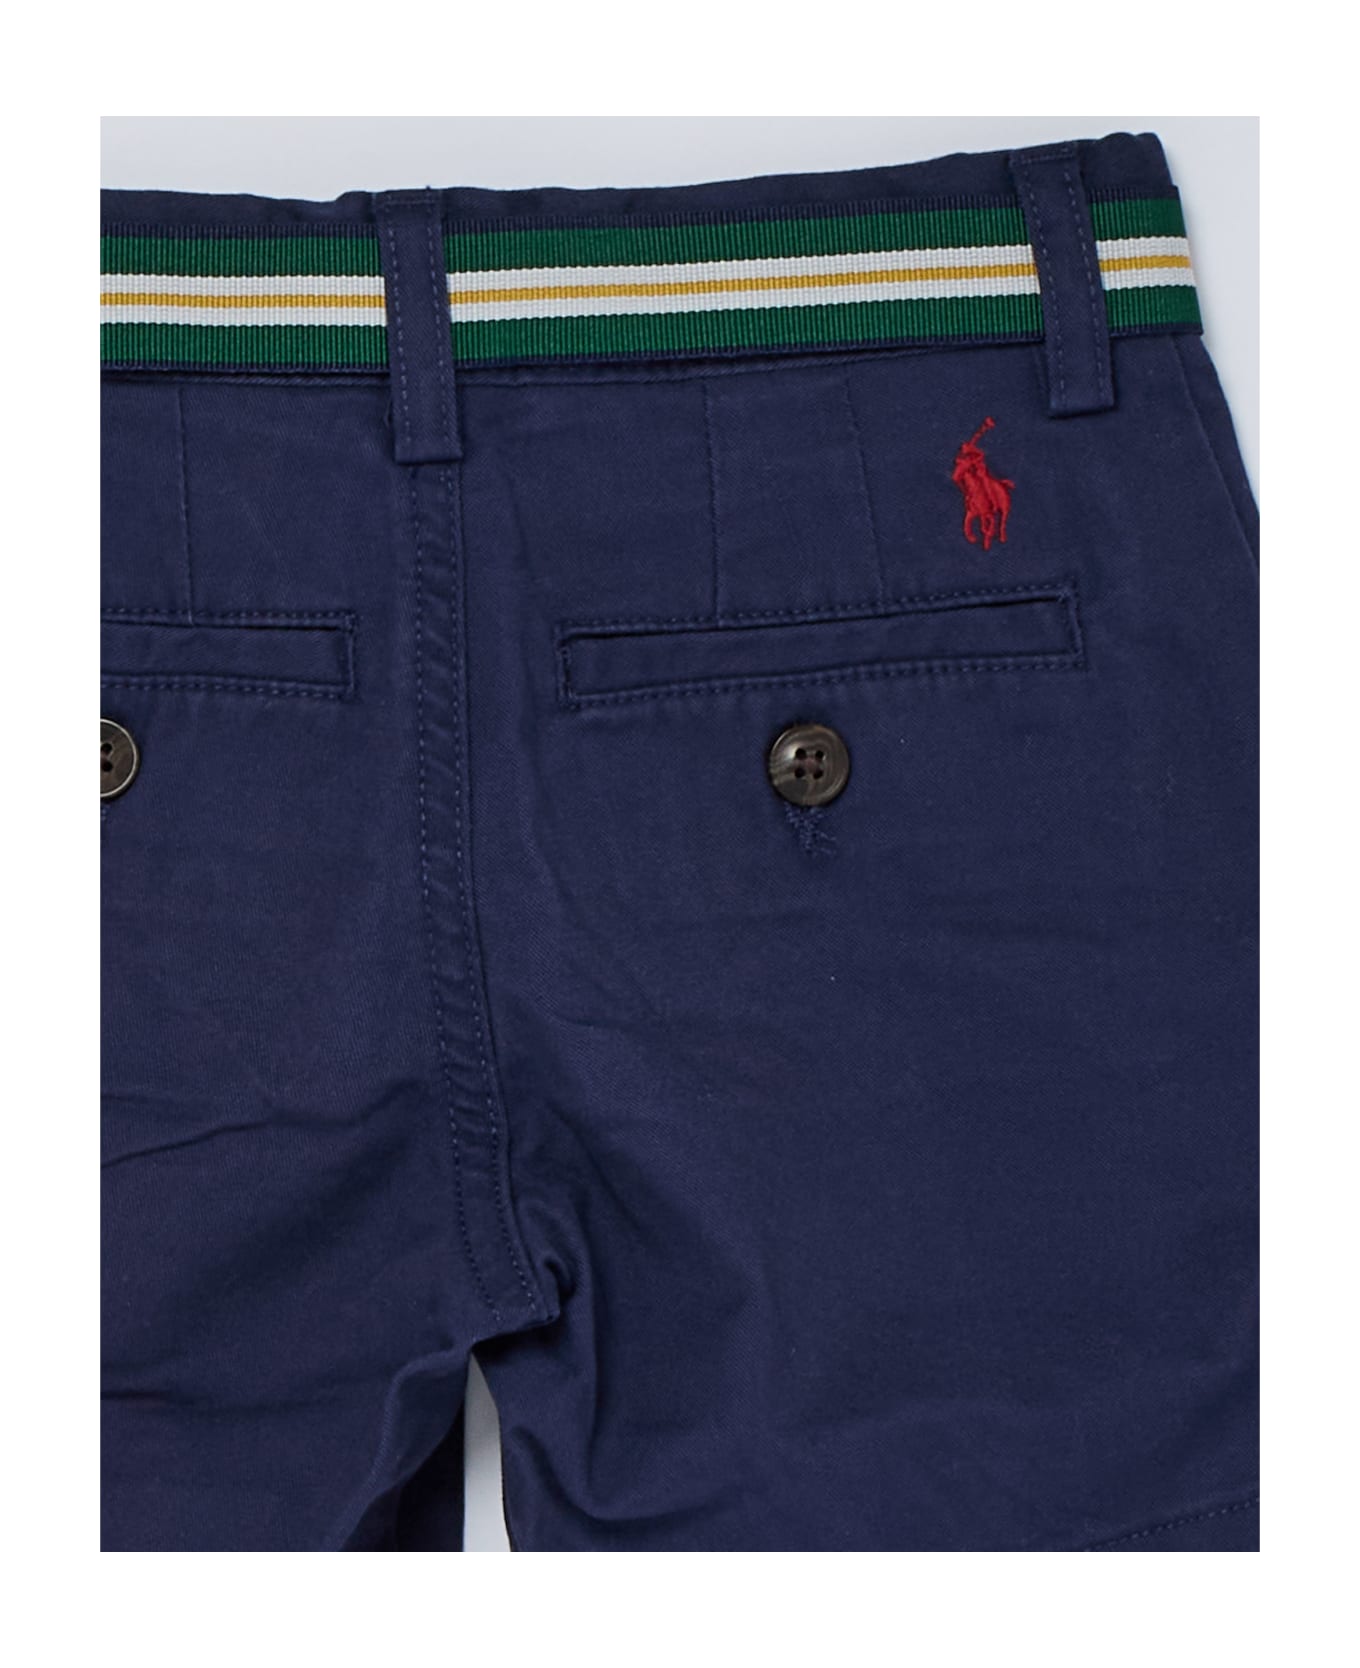 Polo Ralph Lauren Shorts Shorts - NAVY ボトムス